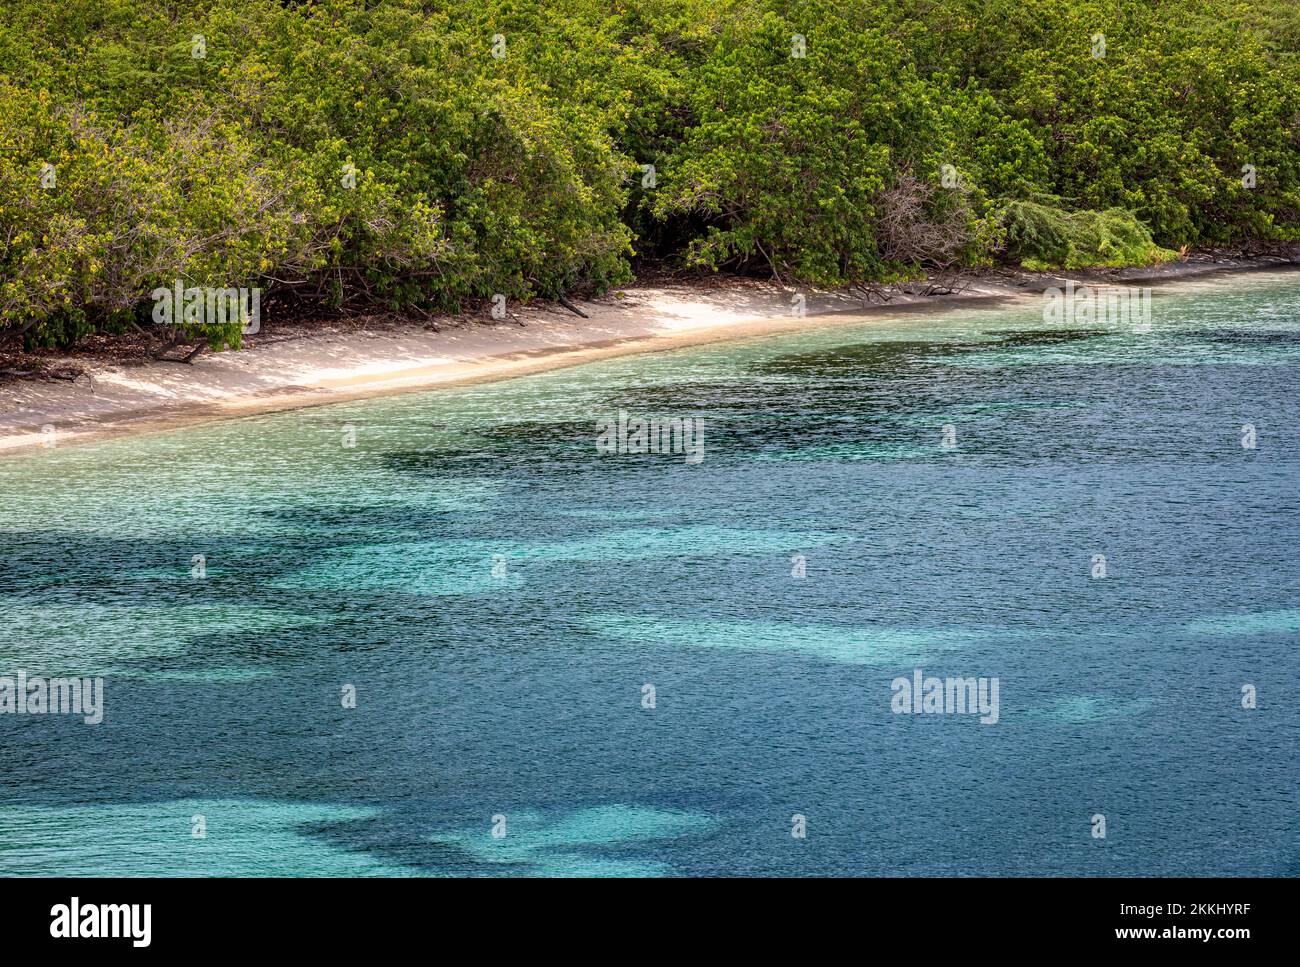 Datiles Beach on the tropical Caribbean island of Culebra, Puerto Rico, USA. Stock Photo